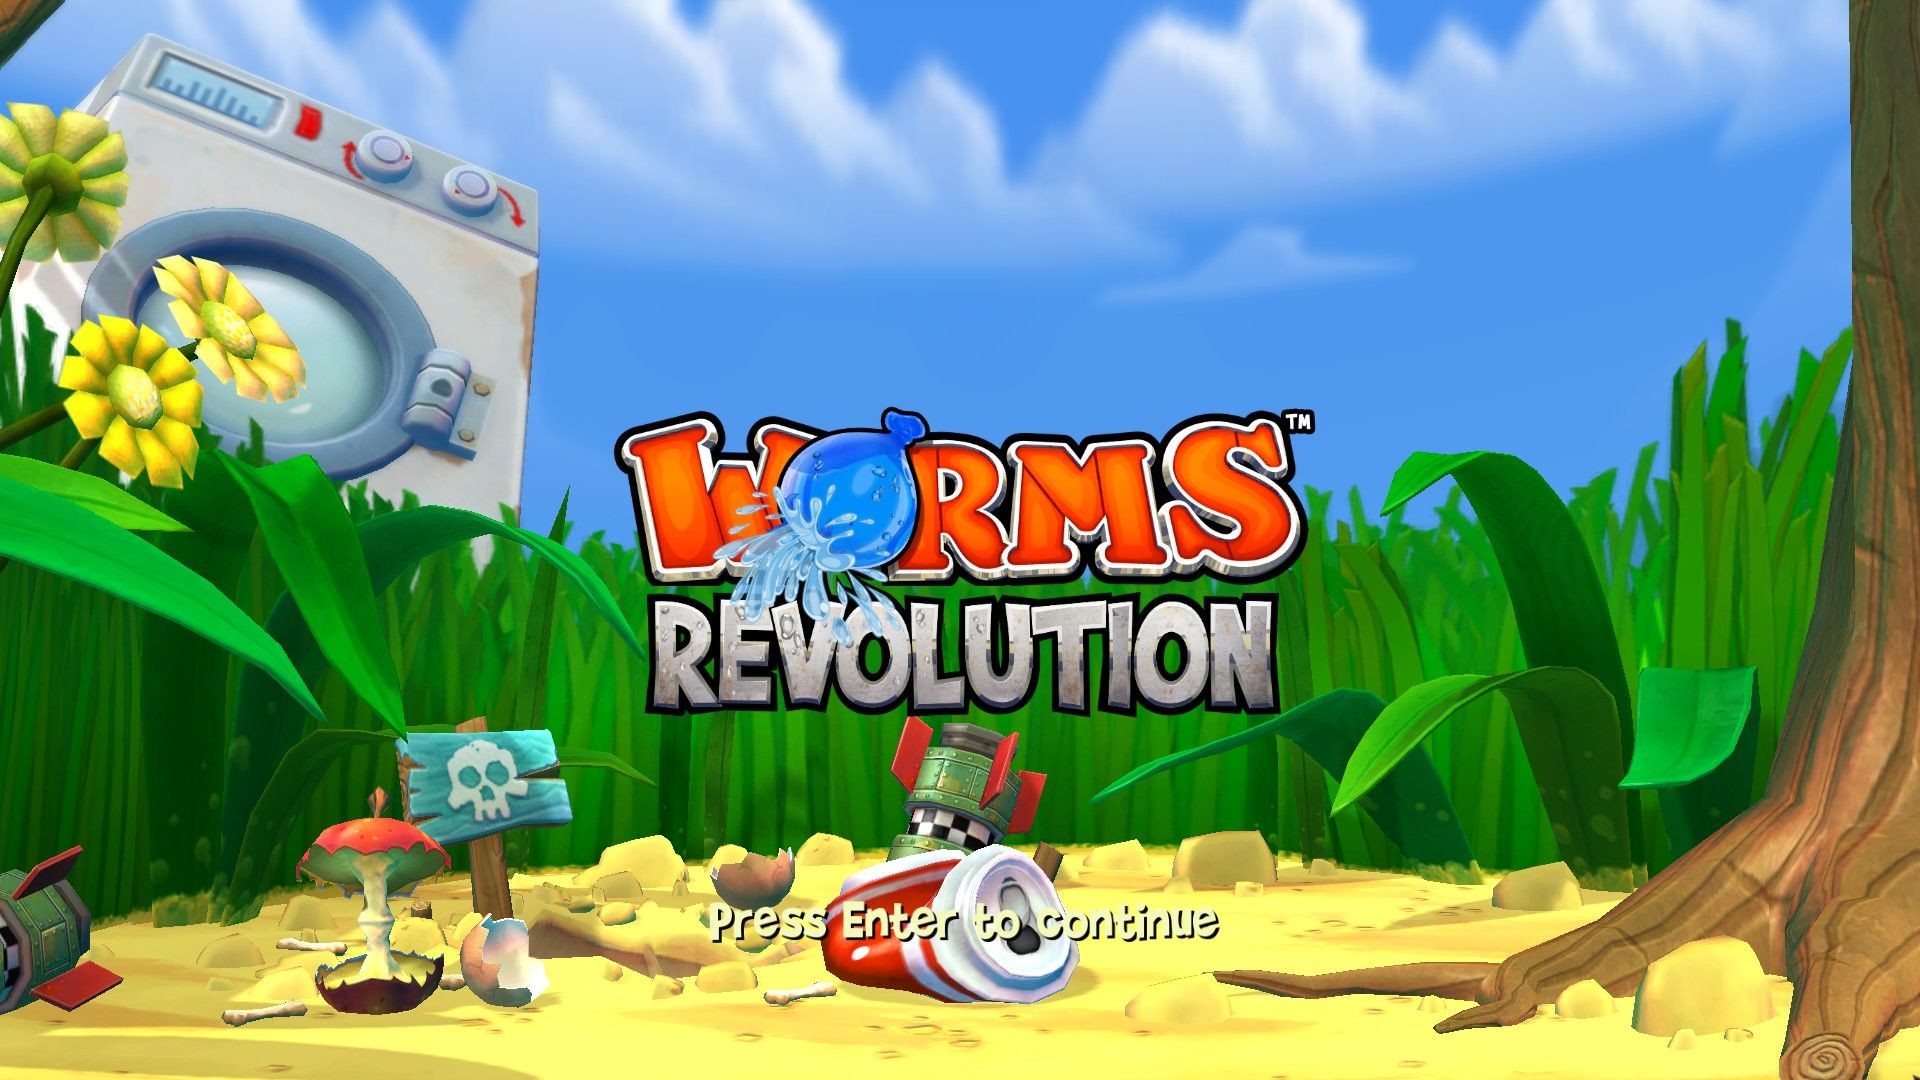 Worms battle. Worms игра. Вормс революшен. Worms картинки. Worms скрины.